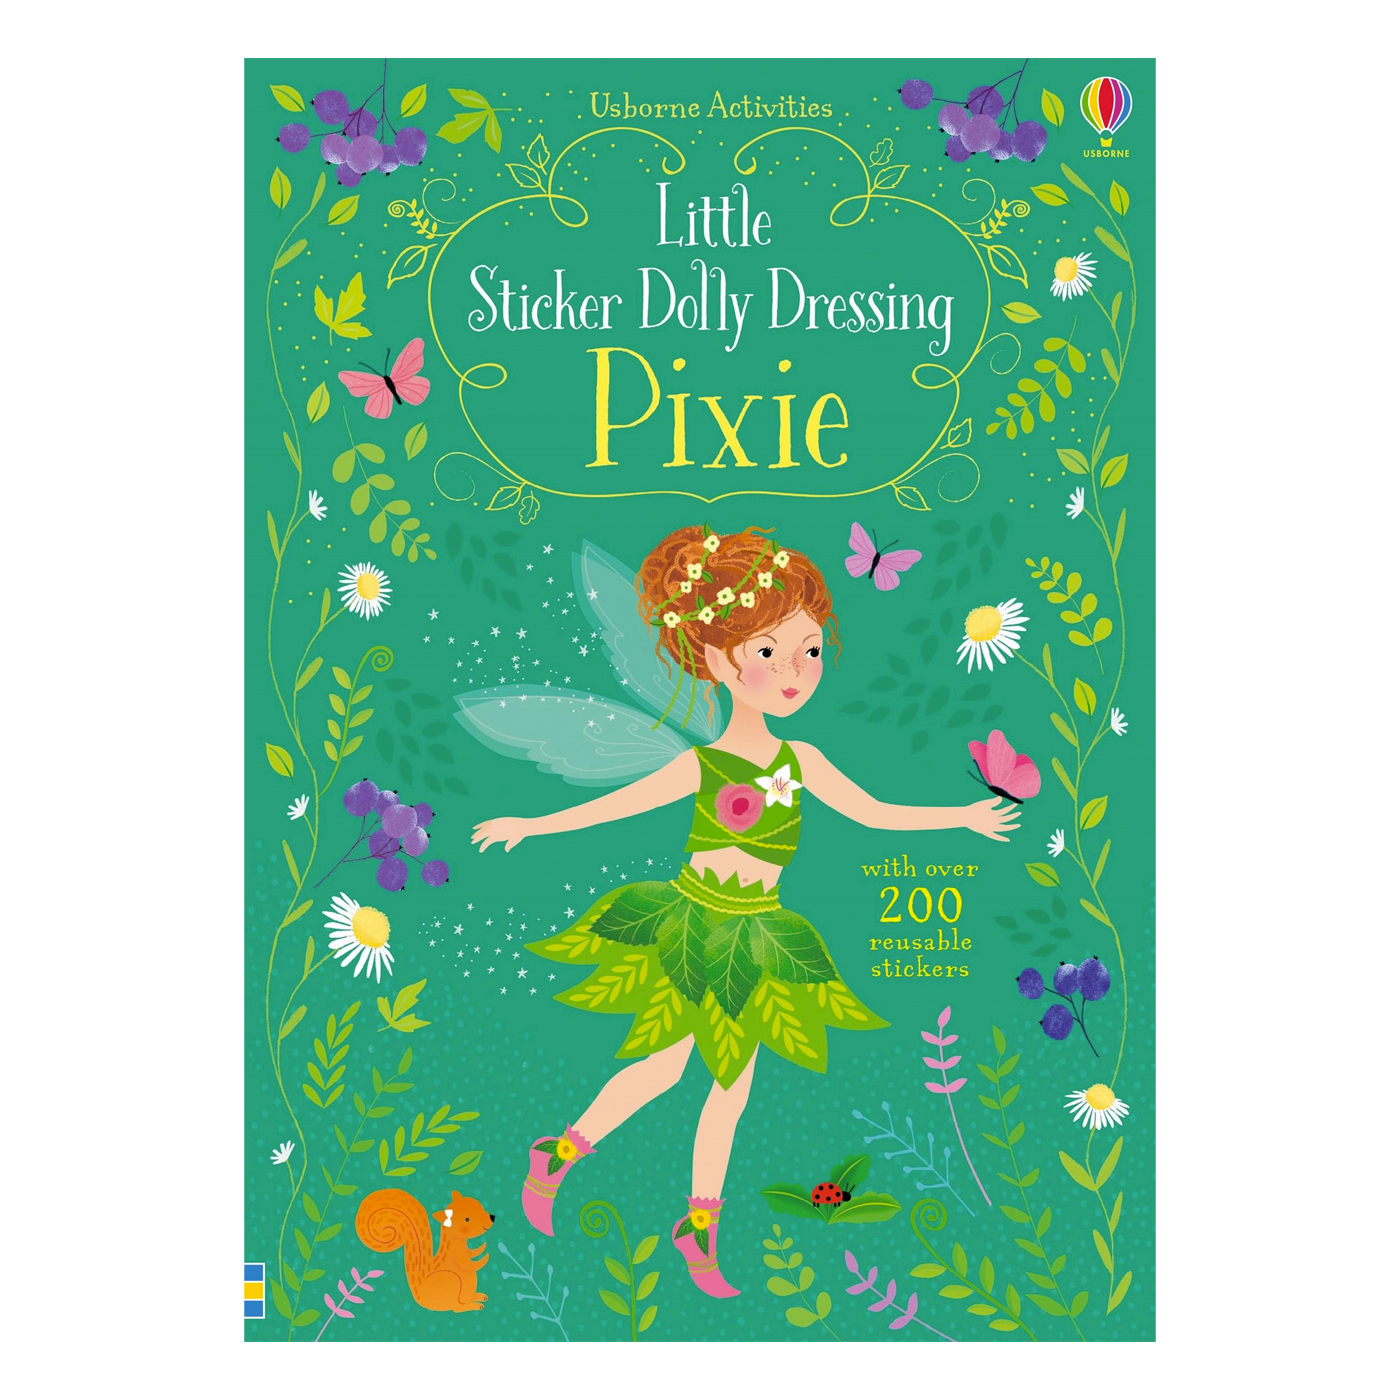  Little Sticker Dolly Dressing Pixie